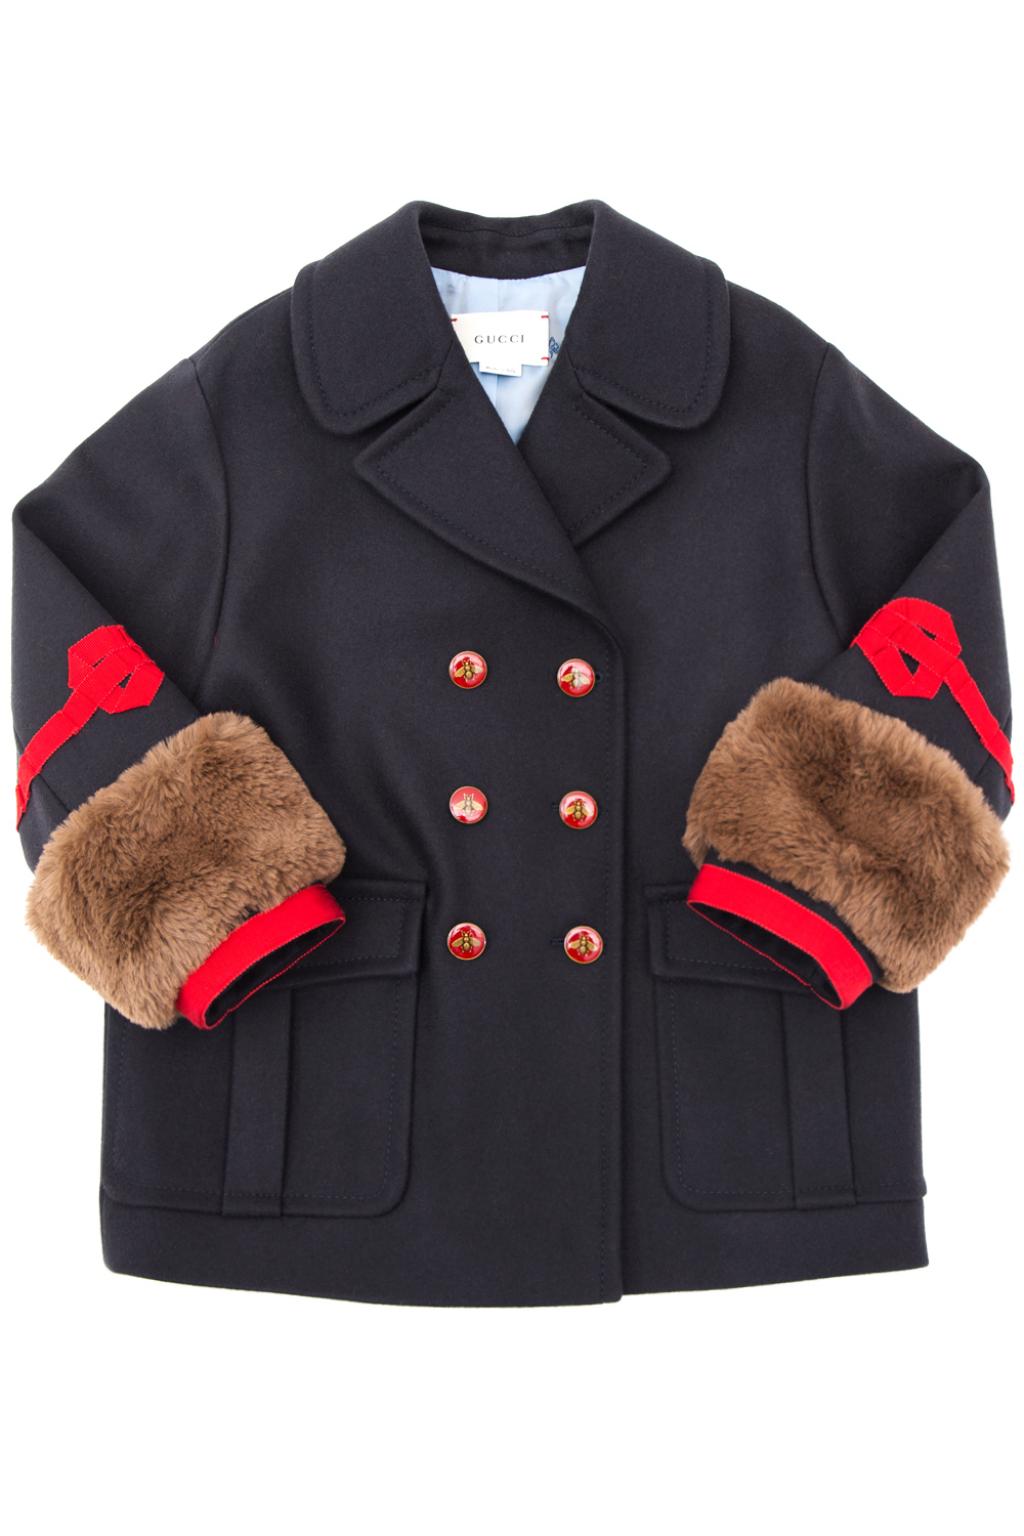 gucci coat for kids